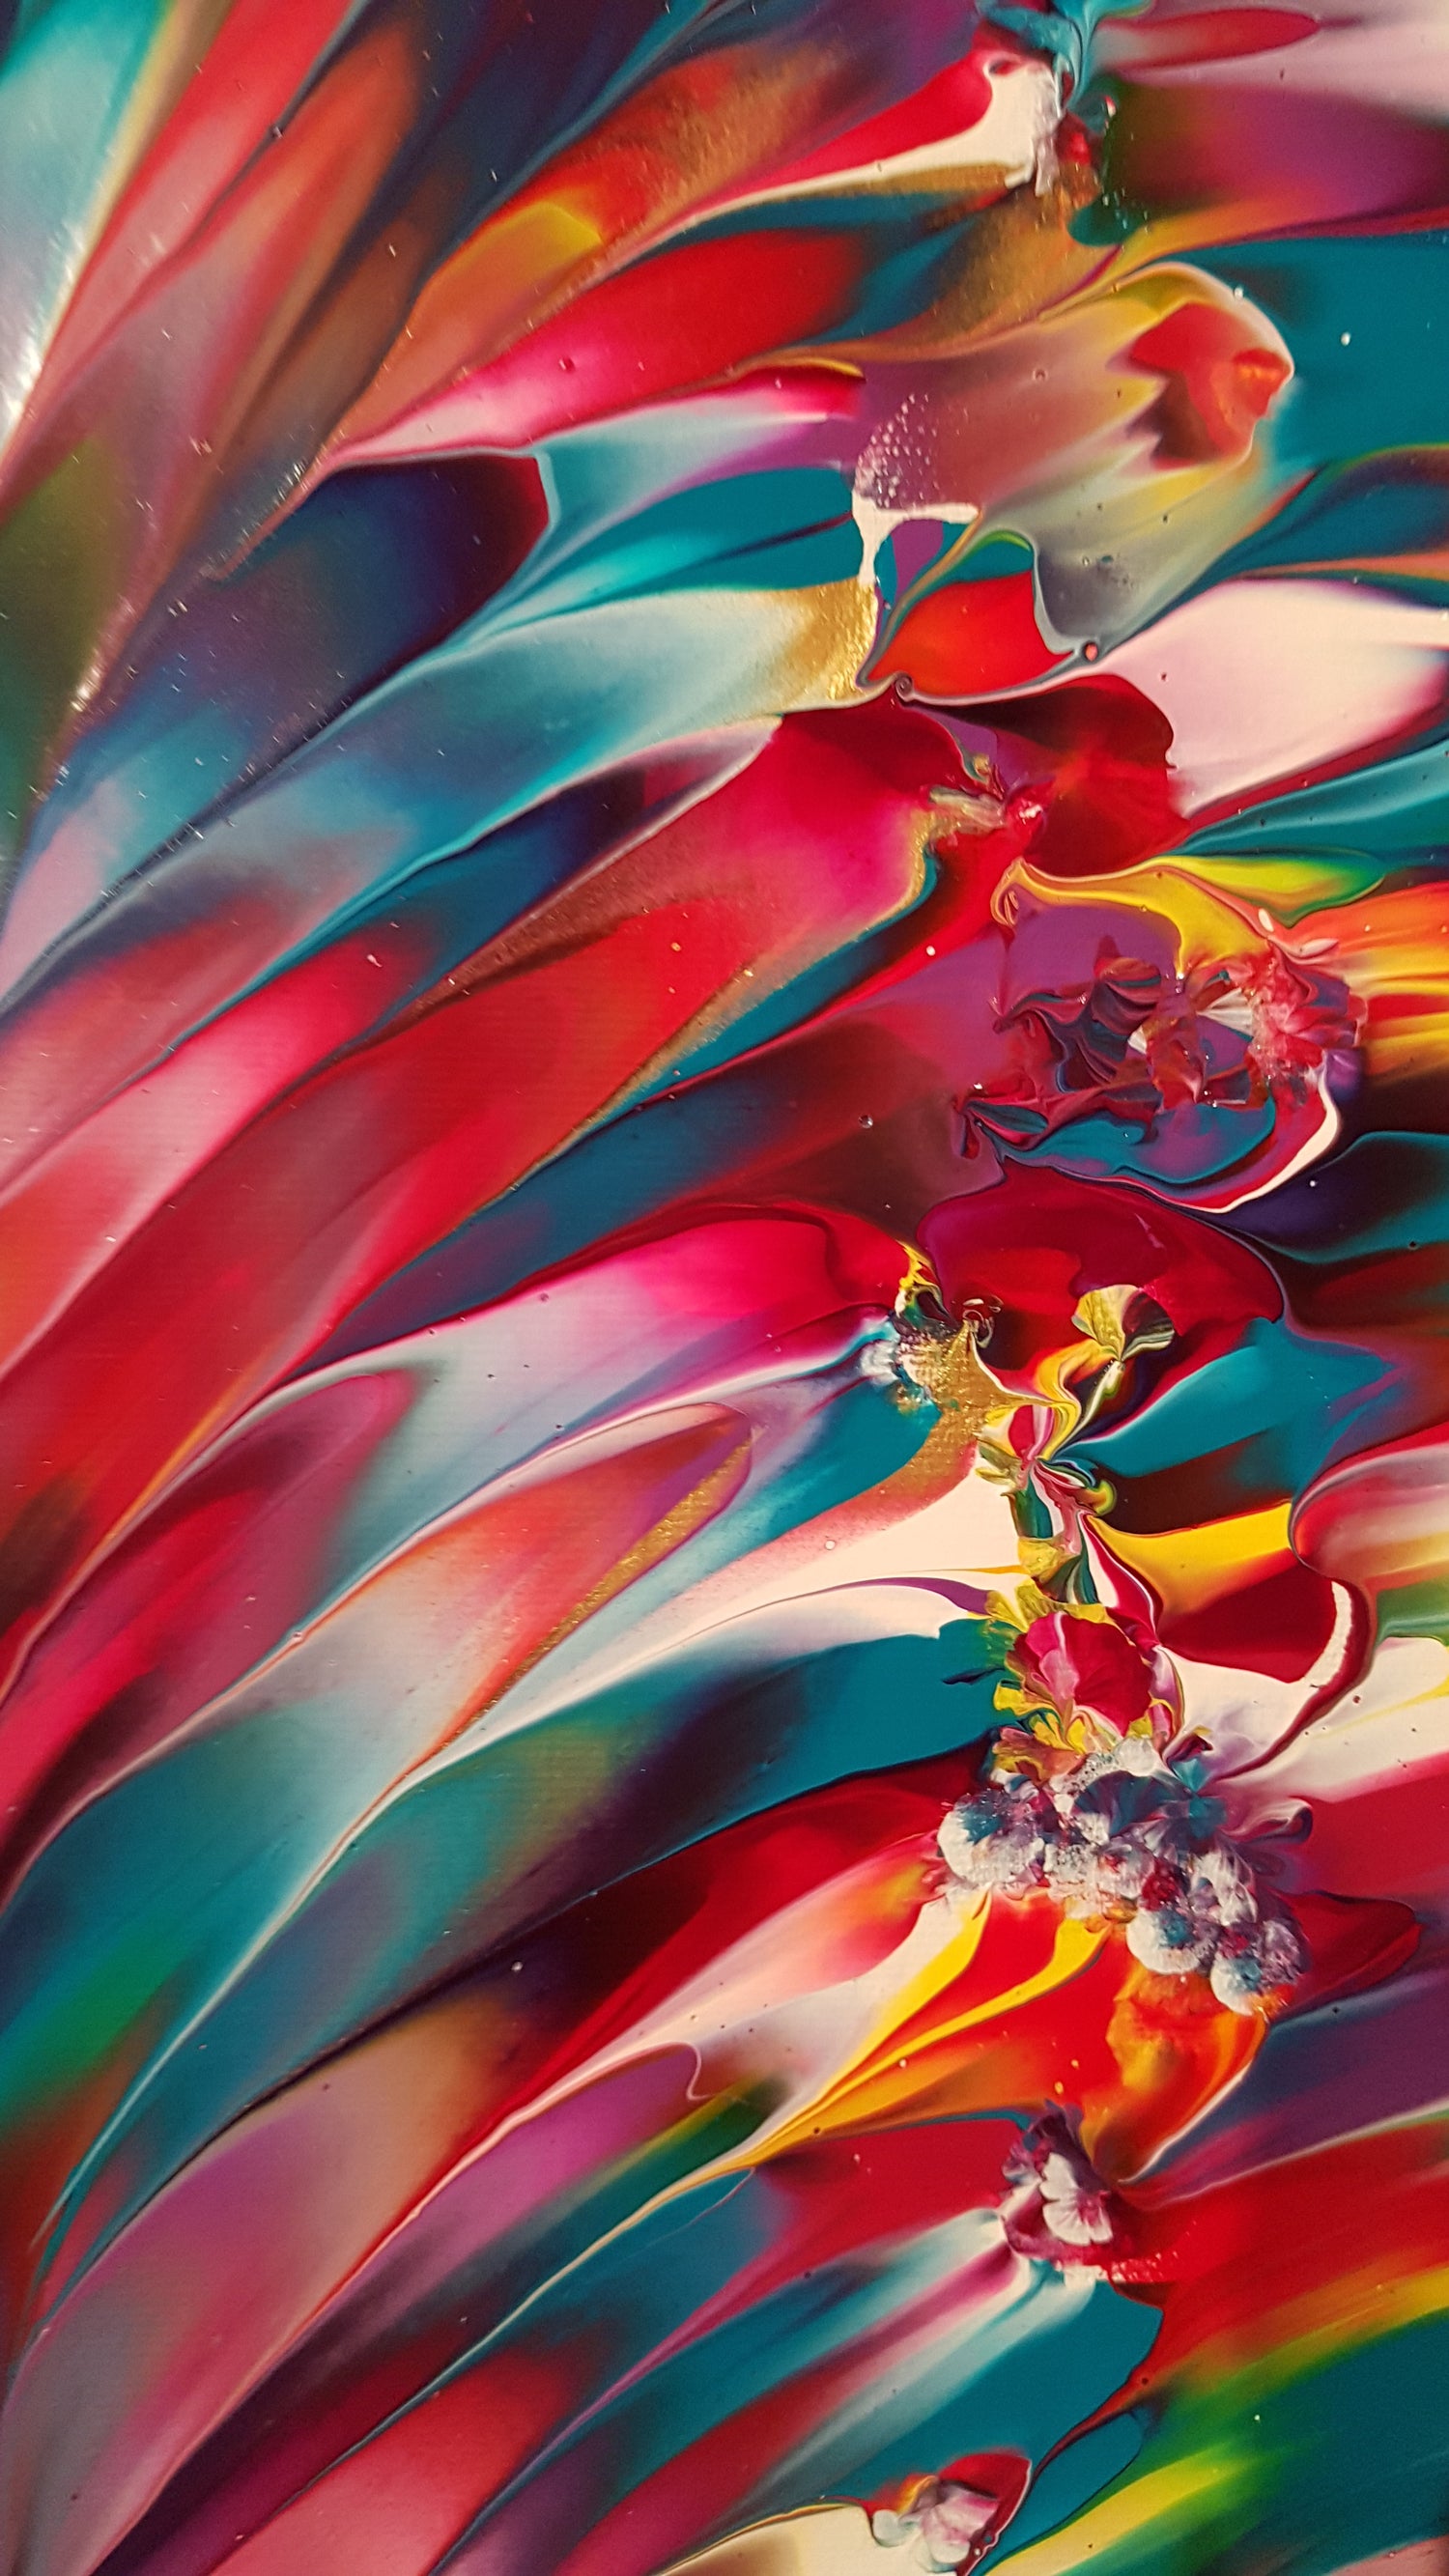 Joe-of-Life-by-Alexandra-Romano-Original-Colourful-Abstract-Paintings-for-Sale-Vibrant-Artwork-Toronto-Artist